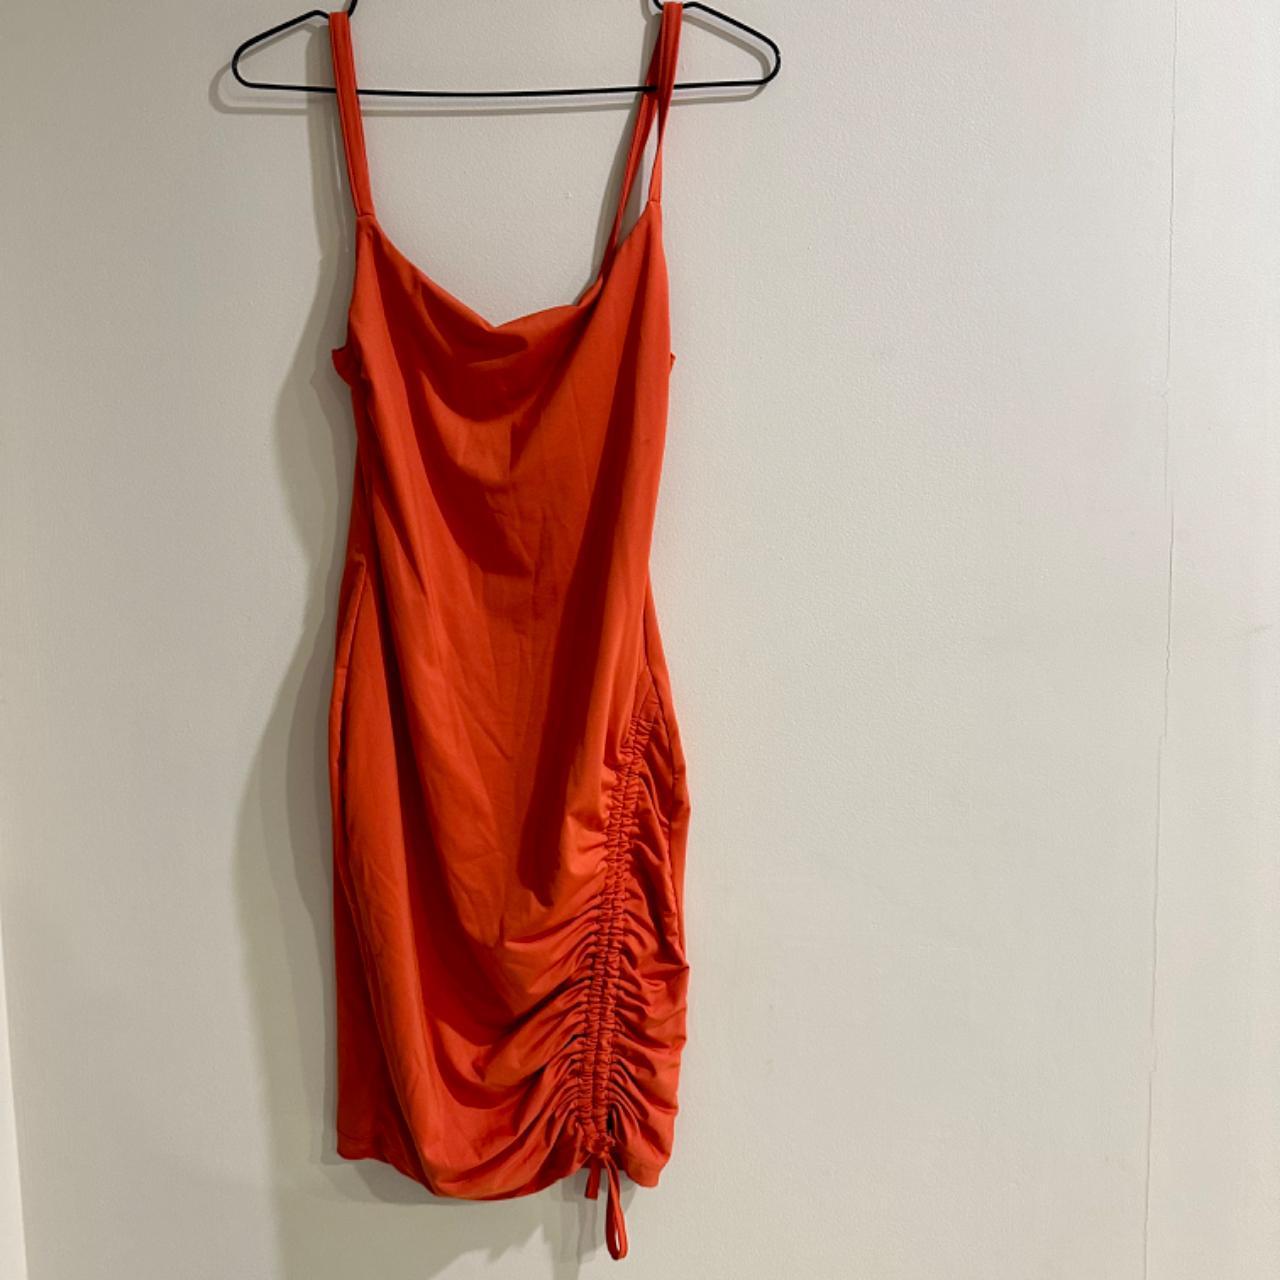 KOOKAI brunt Red scrunch mini dress Size KOOKAI... - Depop